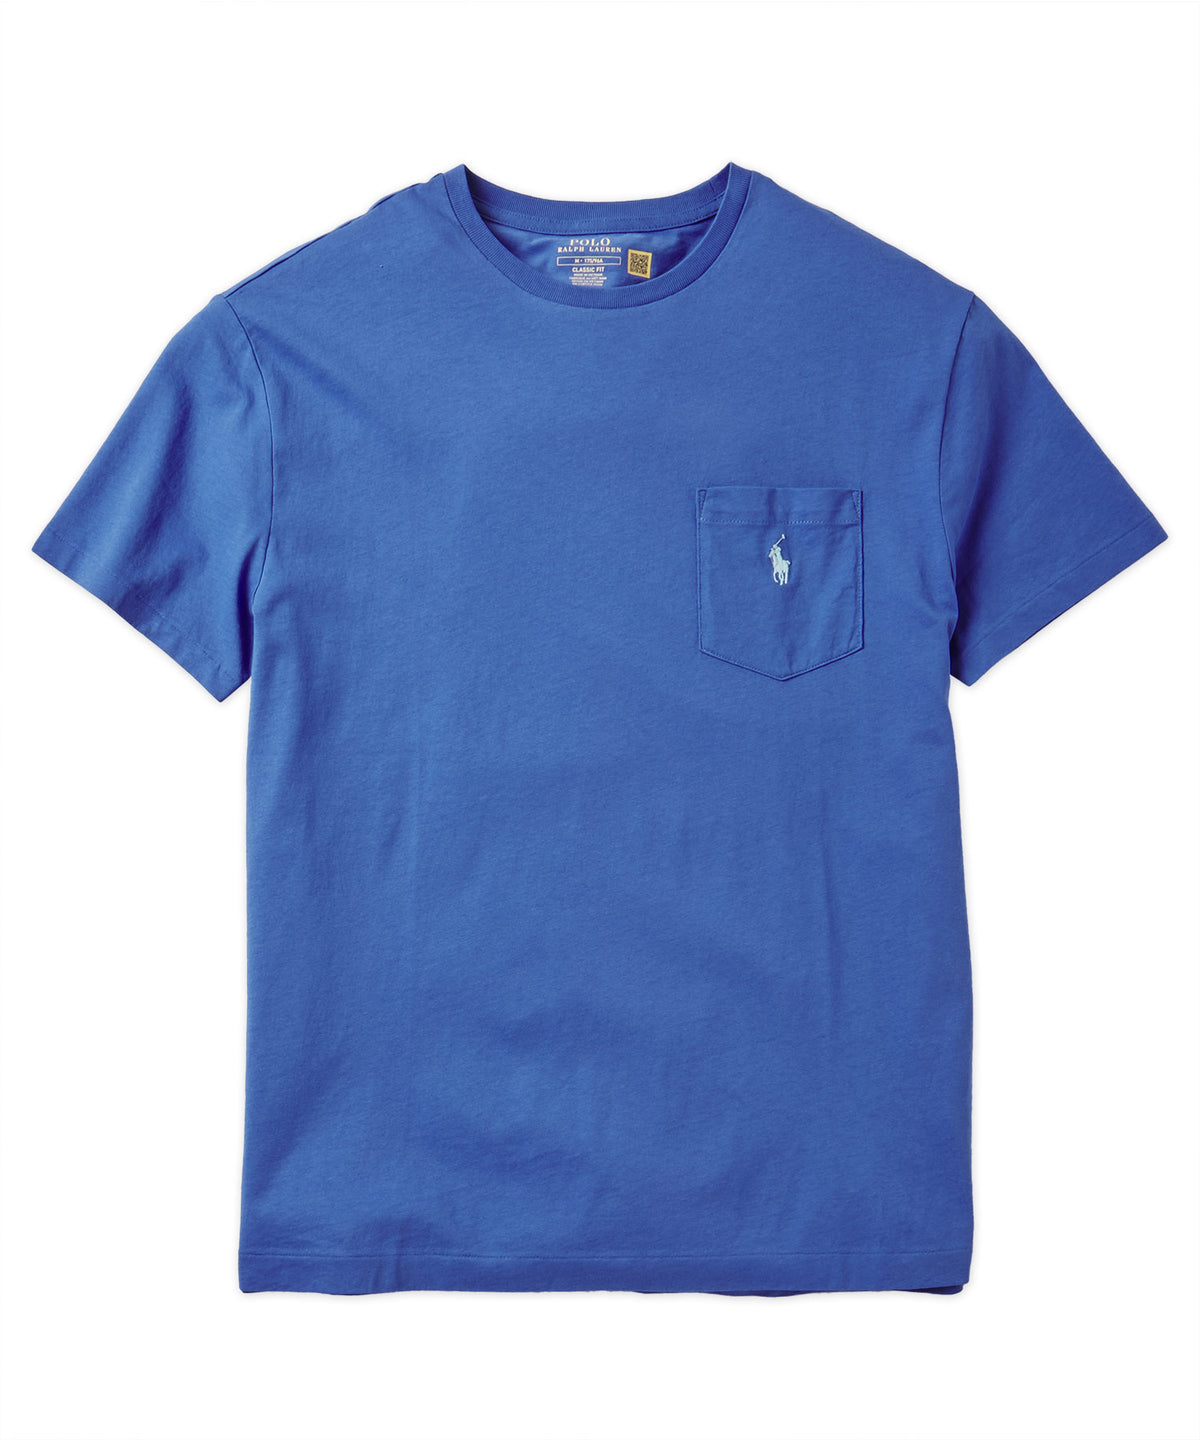 Polo Ralph Lauren Short Sleeve Solid Pocket Crewneck Tee Shirt, Big & Tall